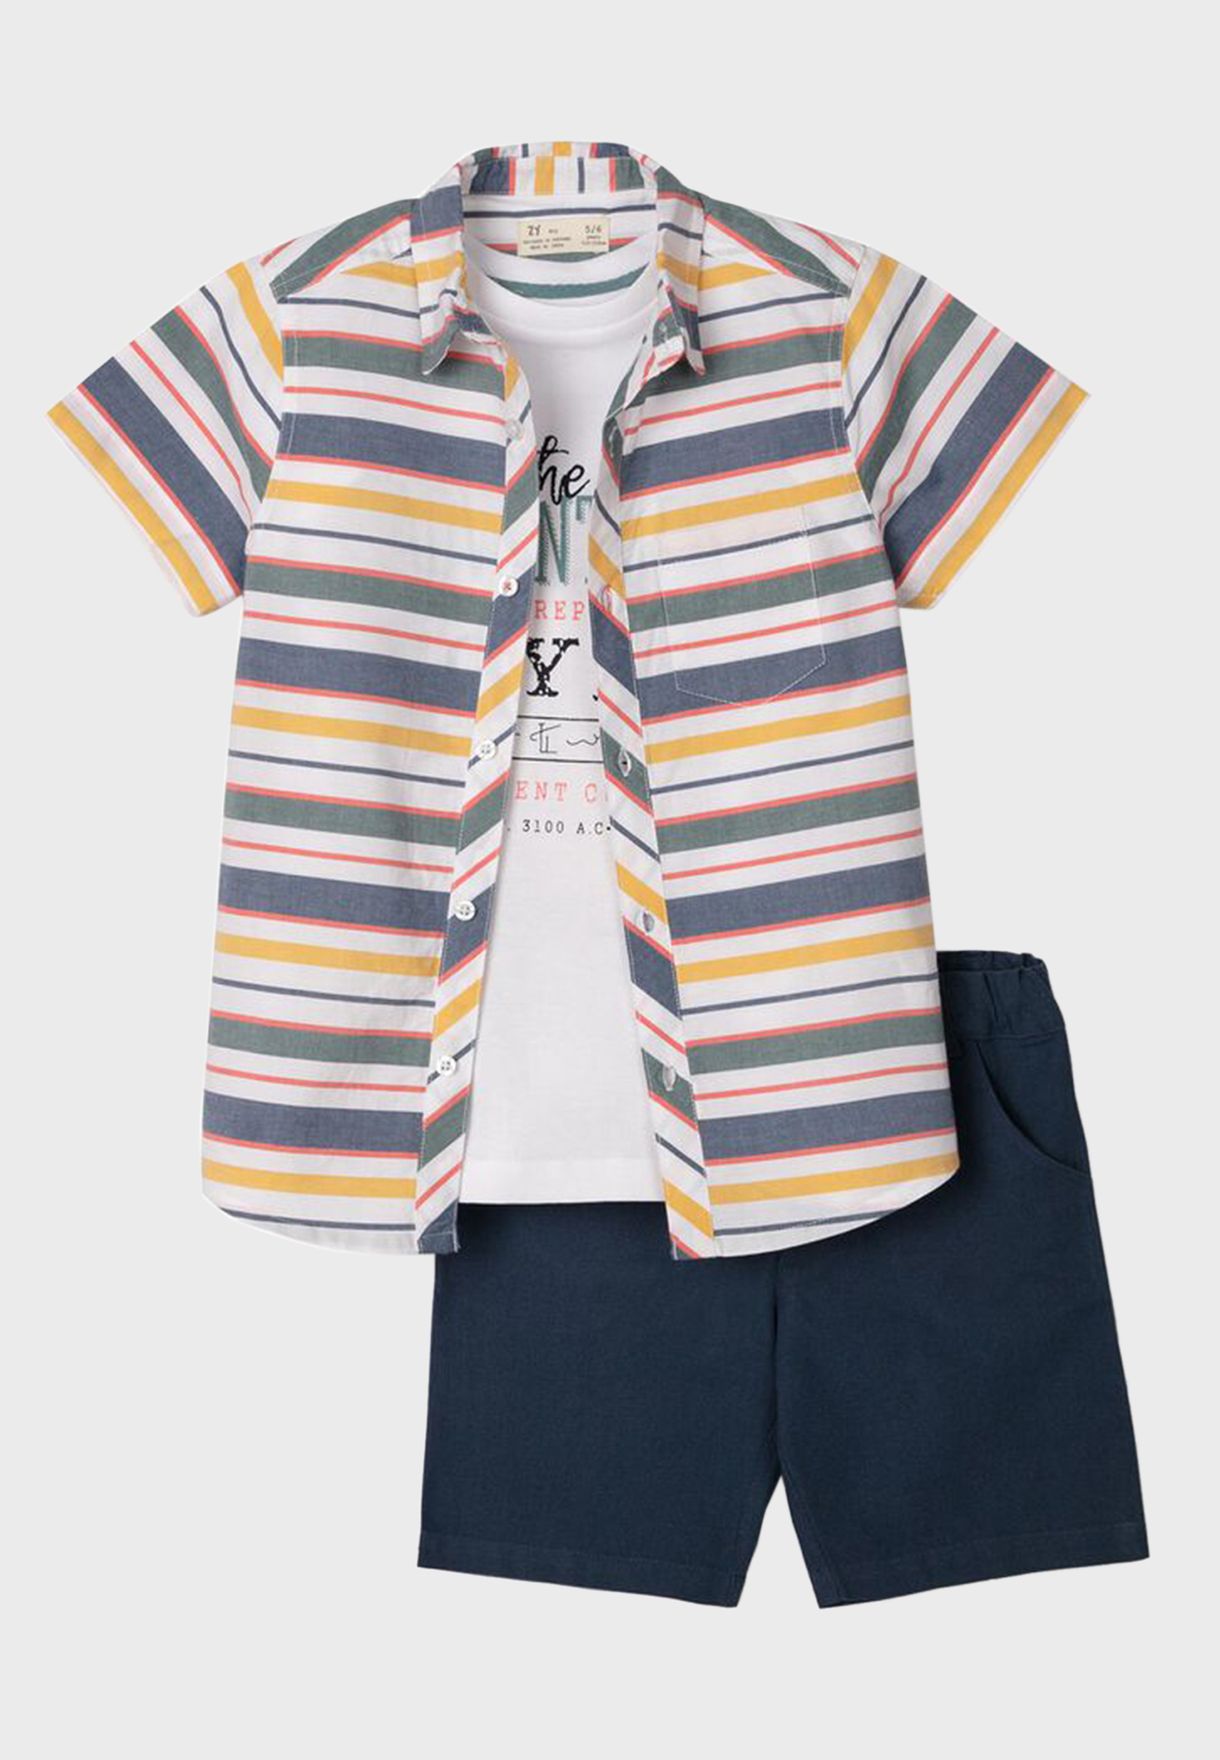 Kids Striped Shirt+ T-shirt + Shorts Set